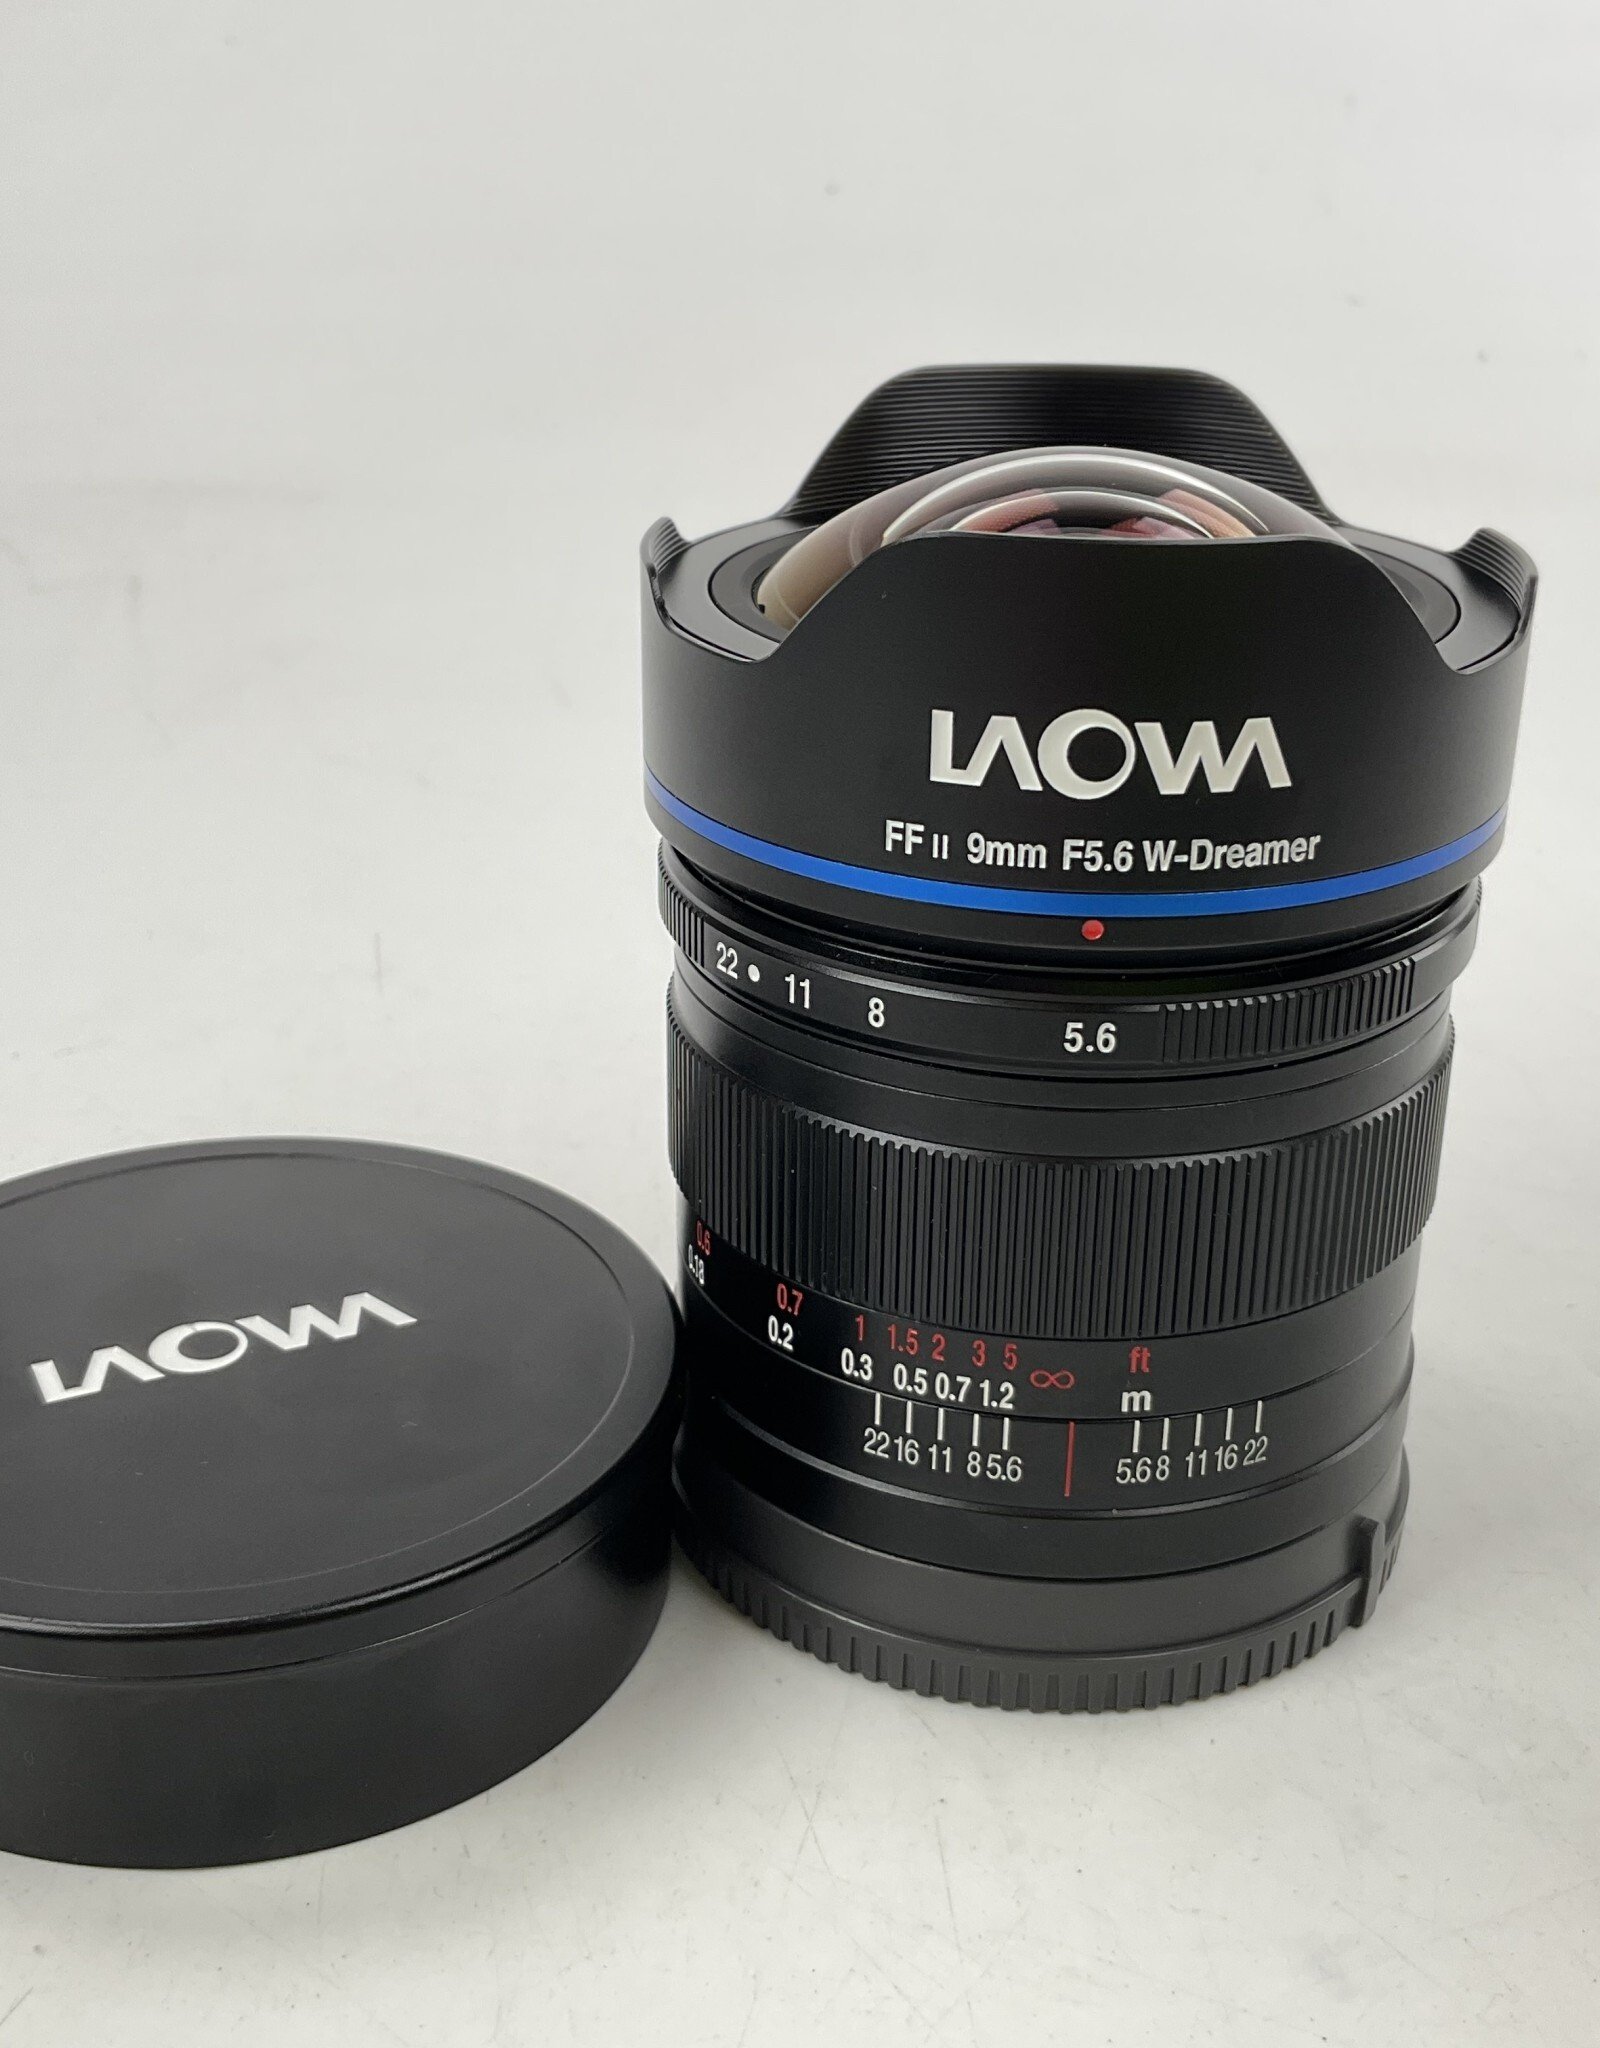 Laowa FF II 9mm f5.6 W-Dreamer Lens for Sony Used Good